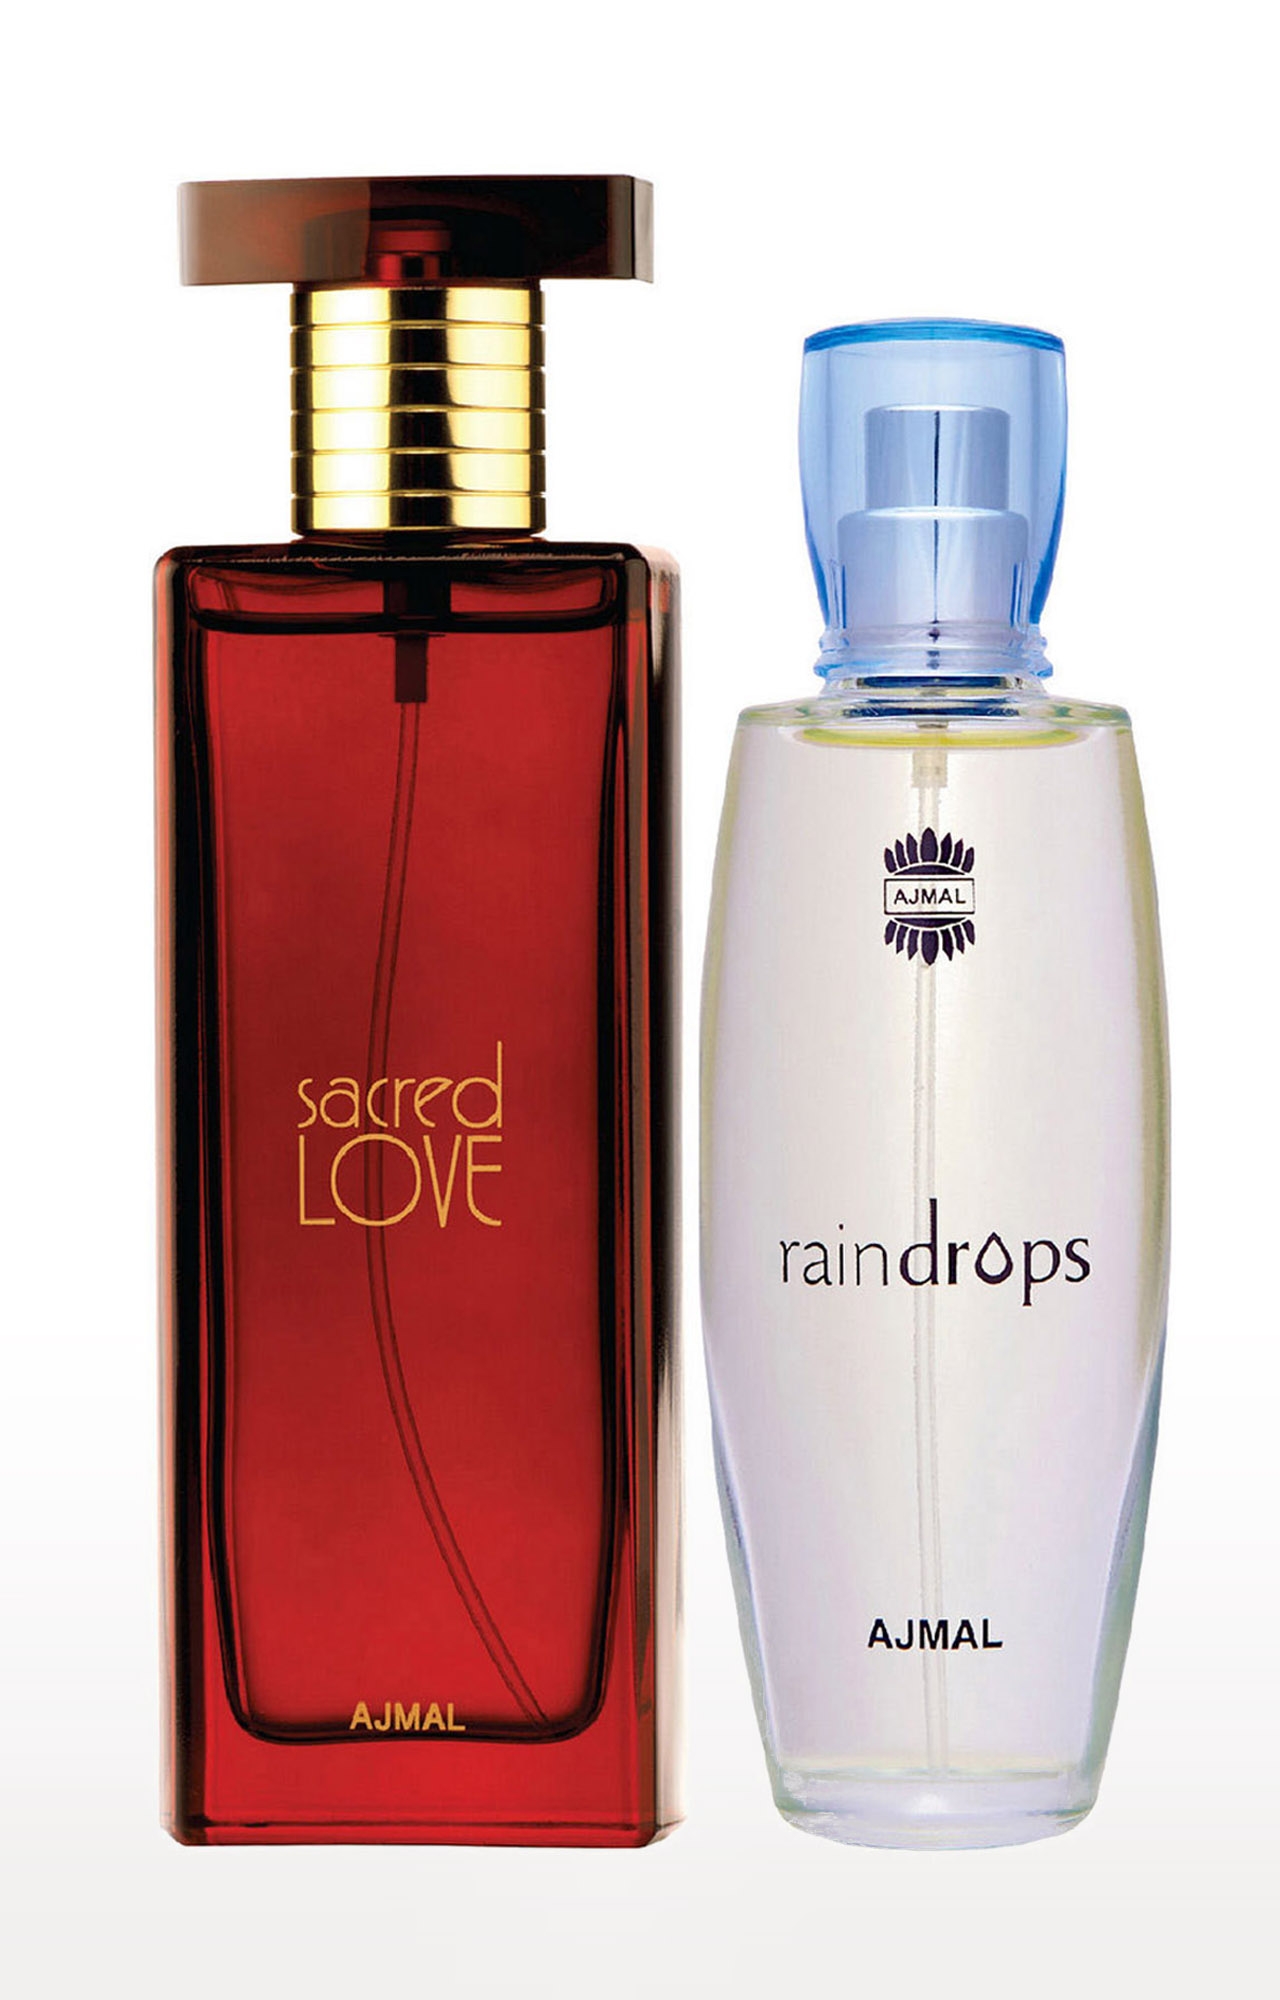 Ajmal Sacred Love EDP Musky Perfume 50ml for Women and Raindrops EDP Perfume 50ml for Women